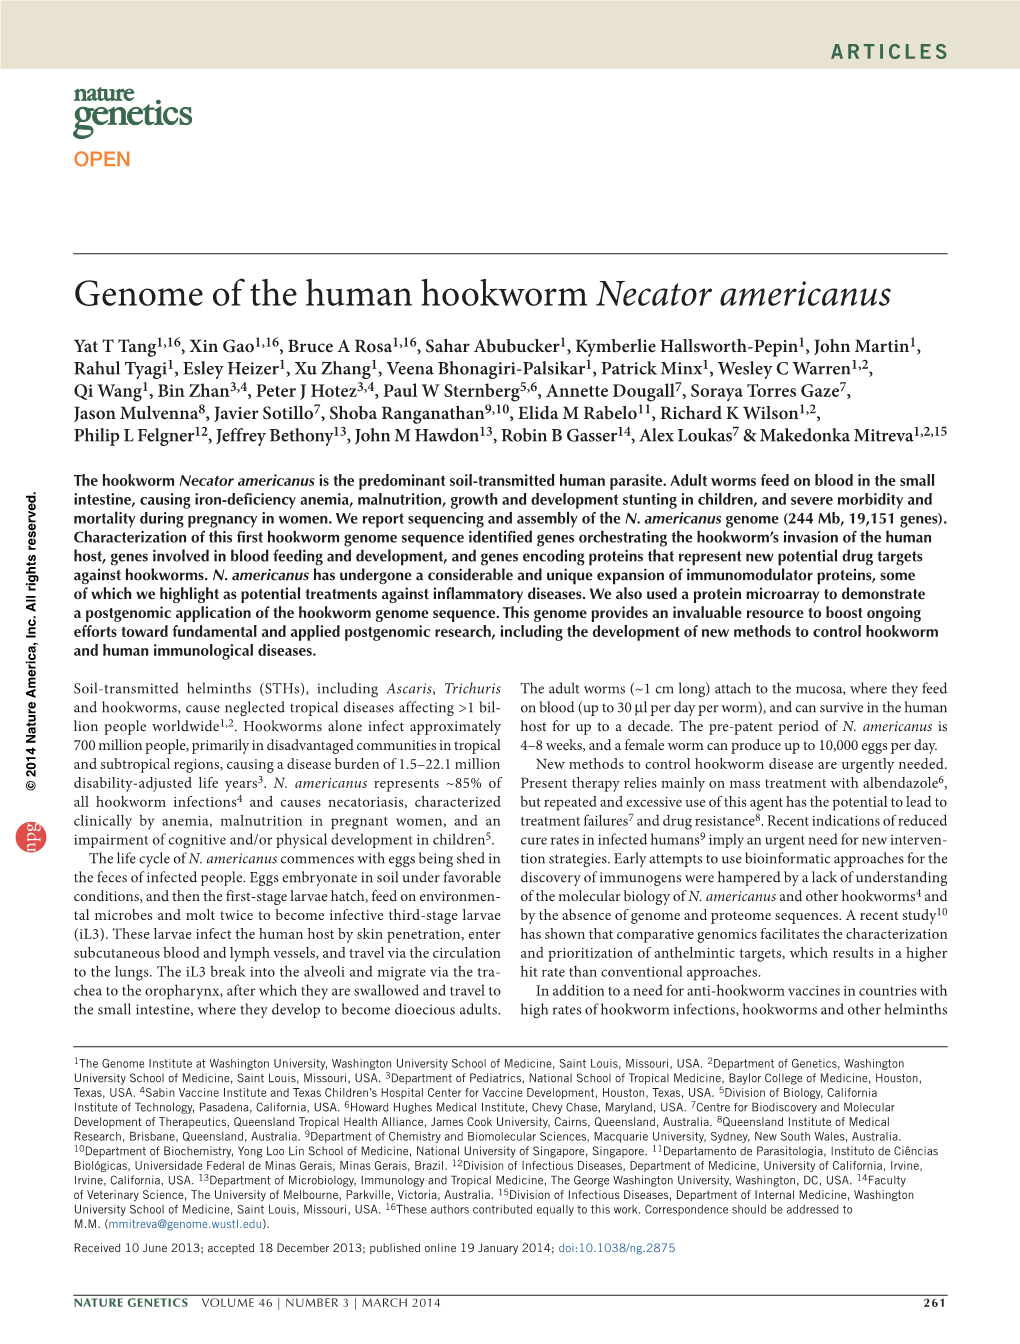 Genome of the Human Hookworm Necator Americanus